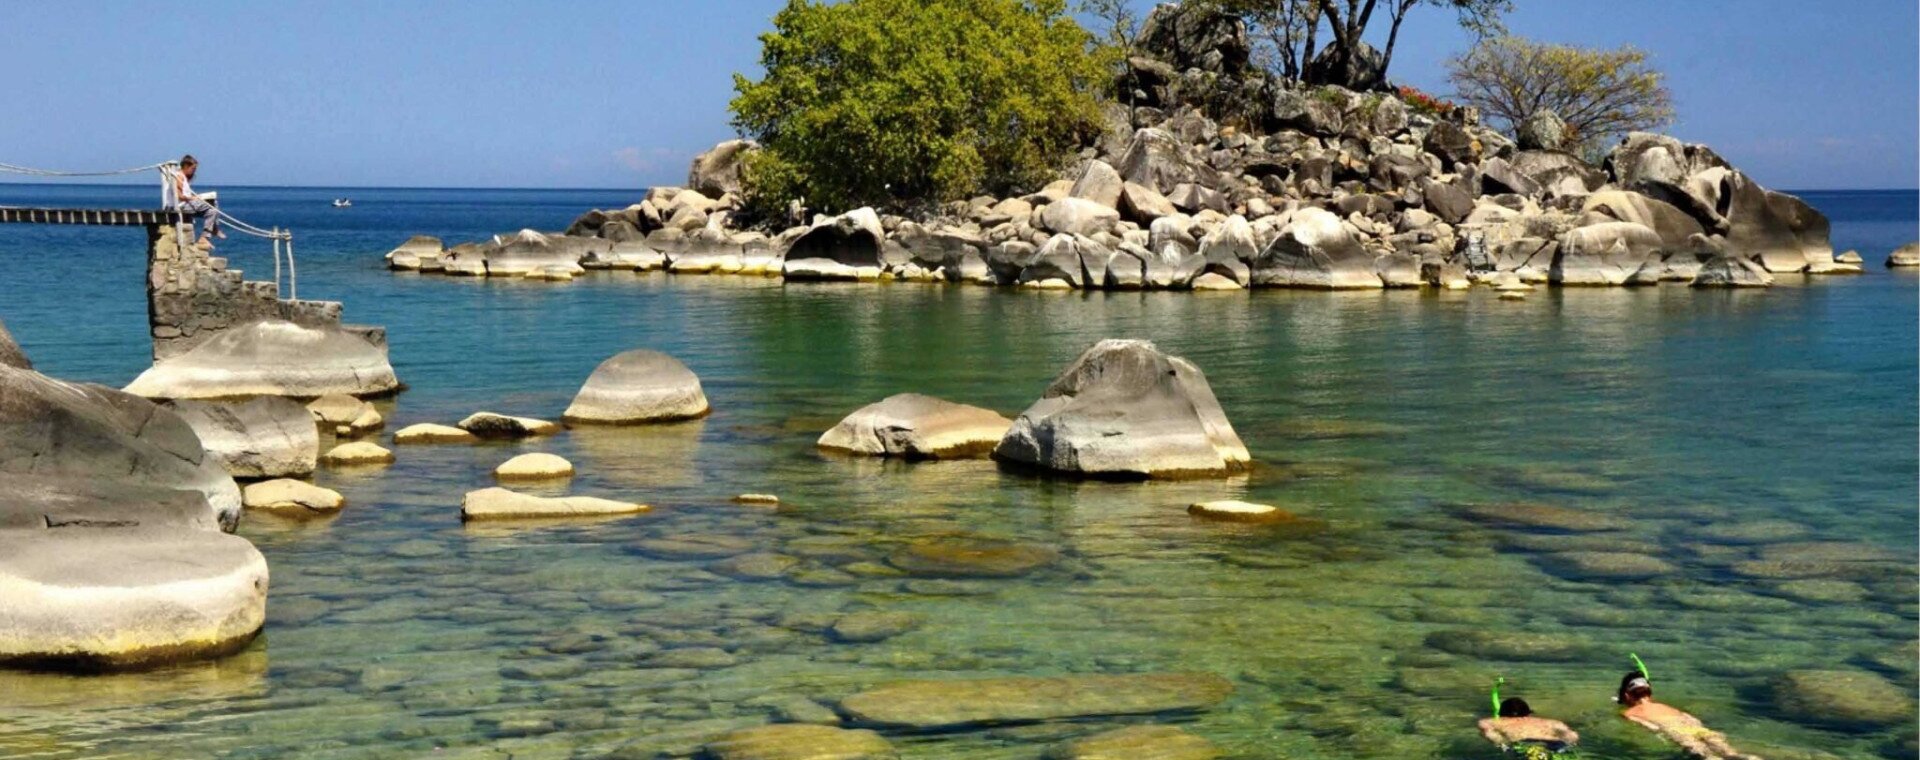 Lake of the superlatives in danger: Lake Malawi is “Threatened Lake of the Year 2022“